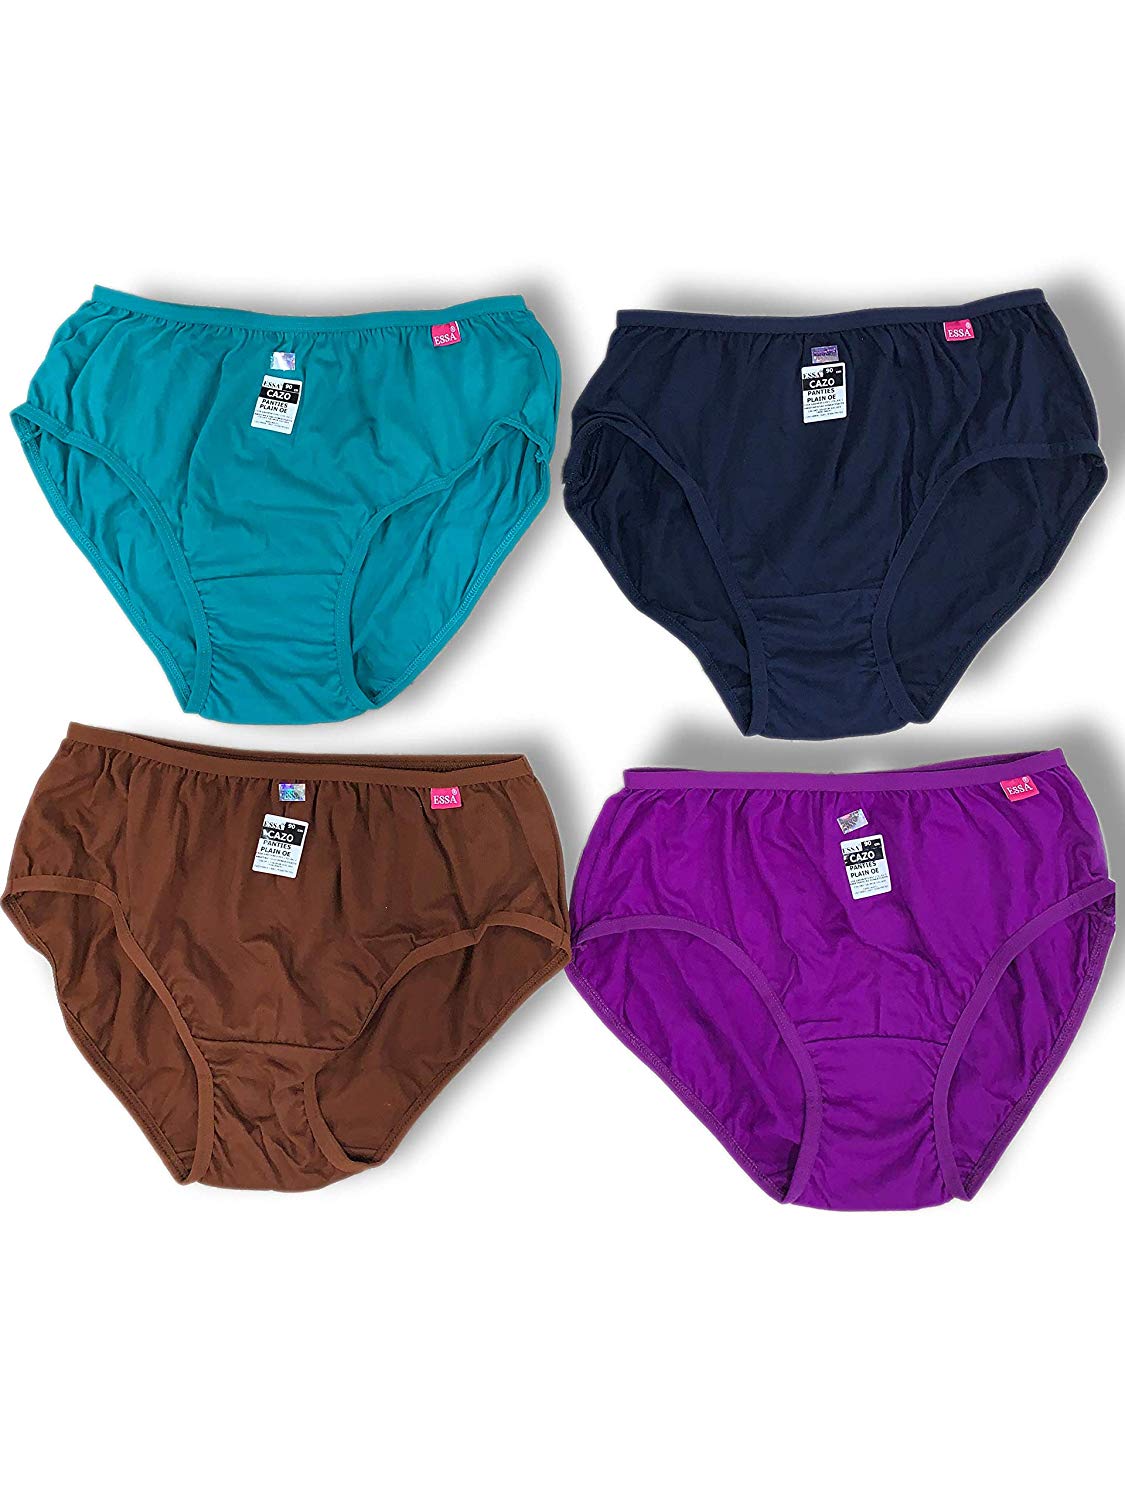 Buy Essa Plain Underwear online from Deepa Textiles